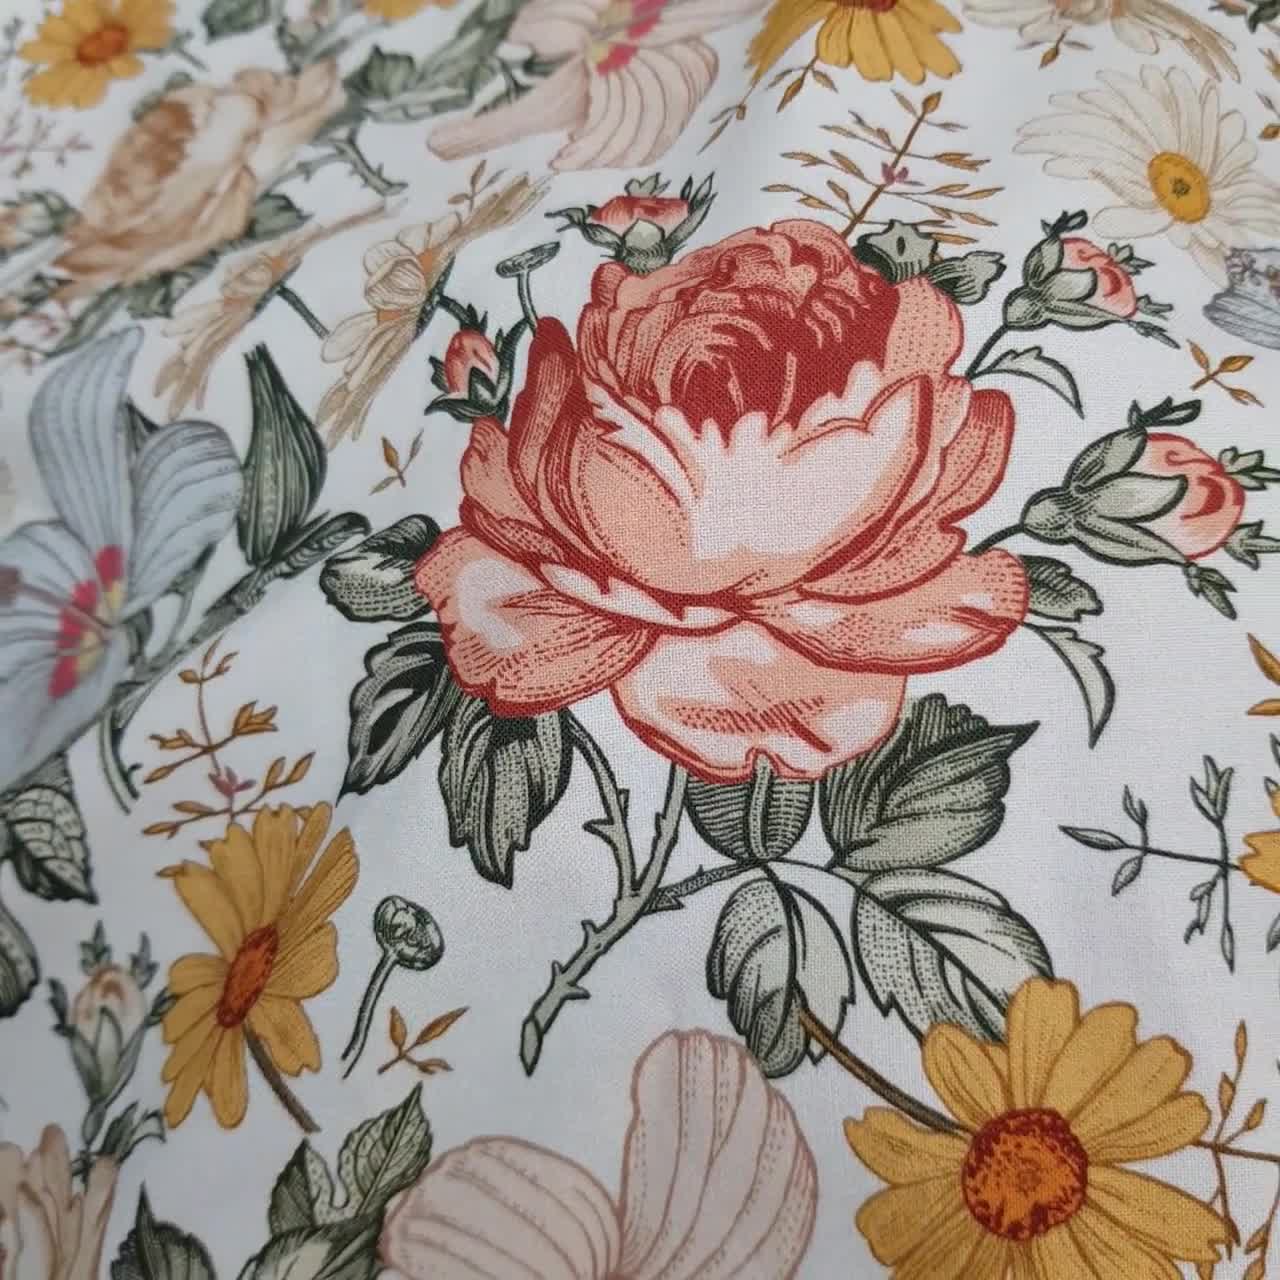 Vintage Floral Fabric Pattern stock photo (40326) - YouWorkForThem